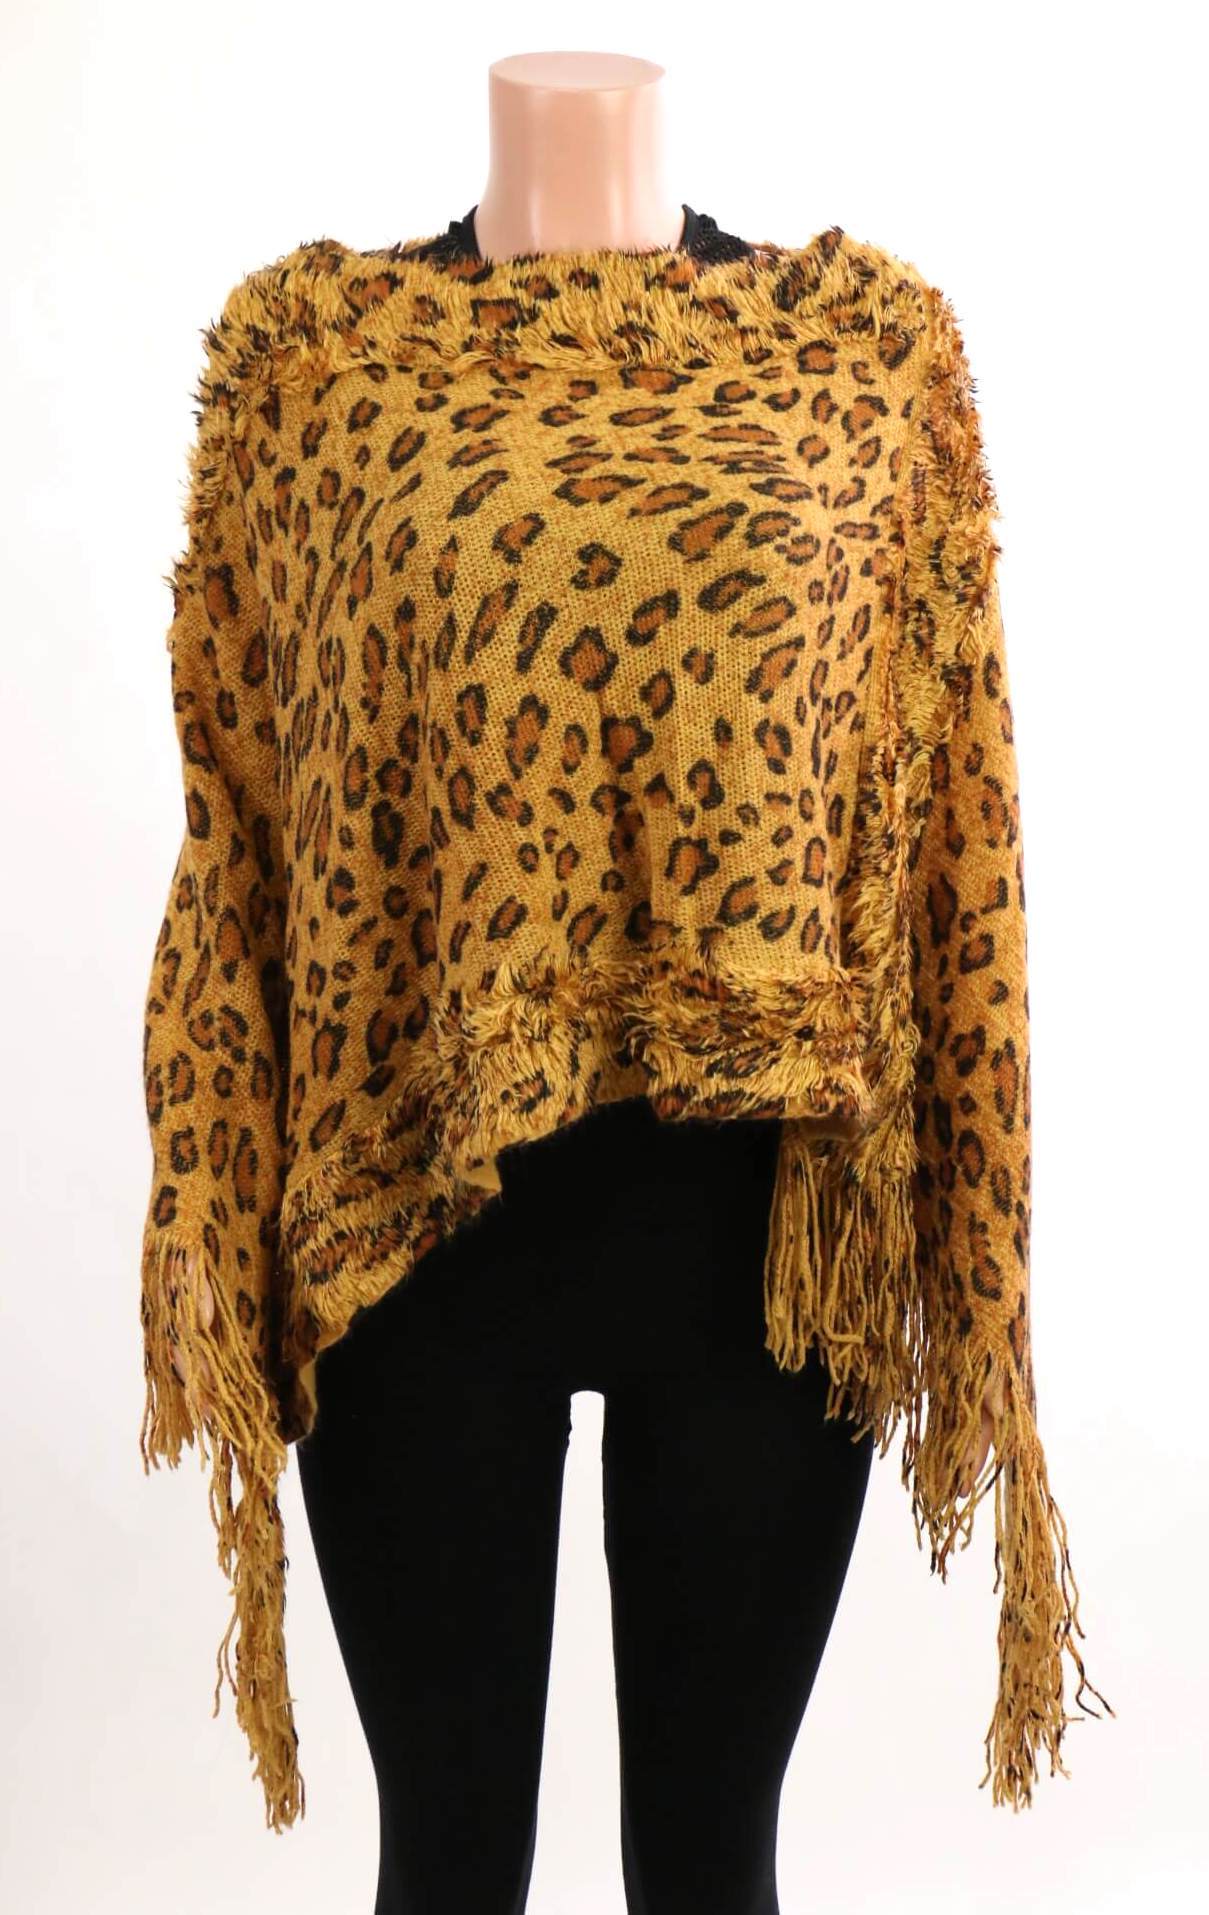 Leopard Print Poncho with Fur Trim / Camel #PC1005CA (PC)